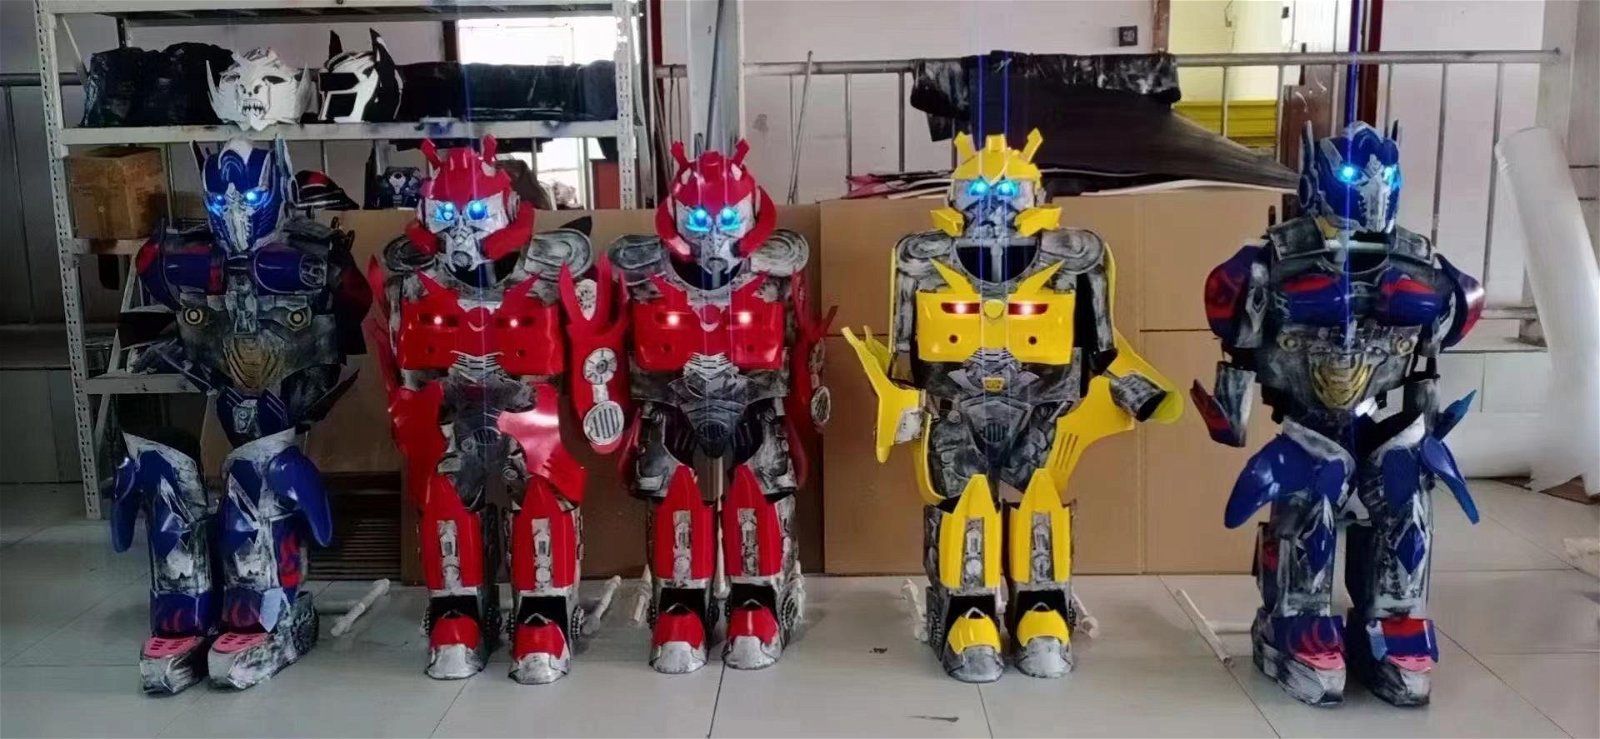 children transformers robot cosplay costume for birthday part